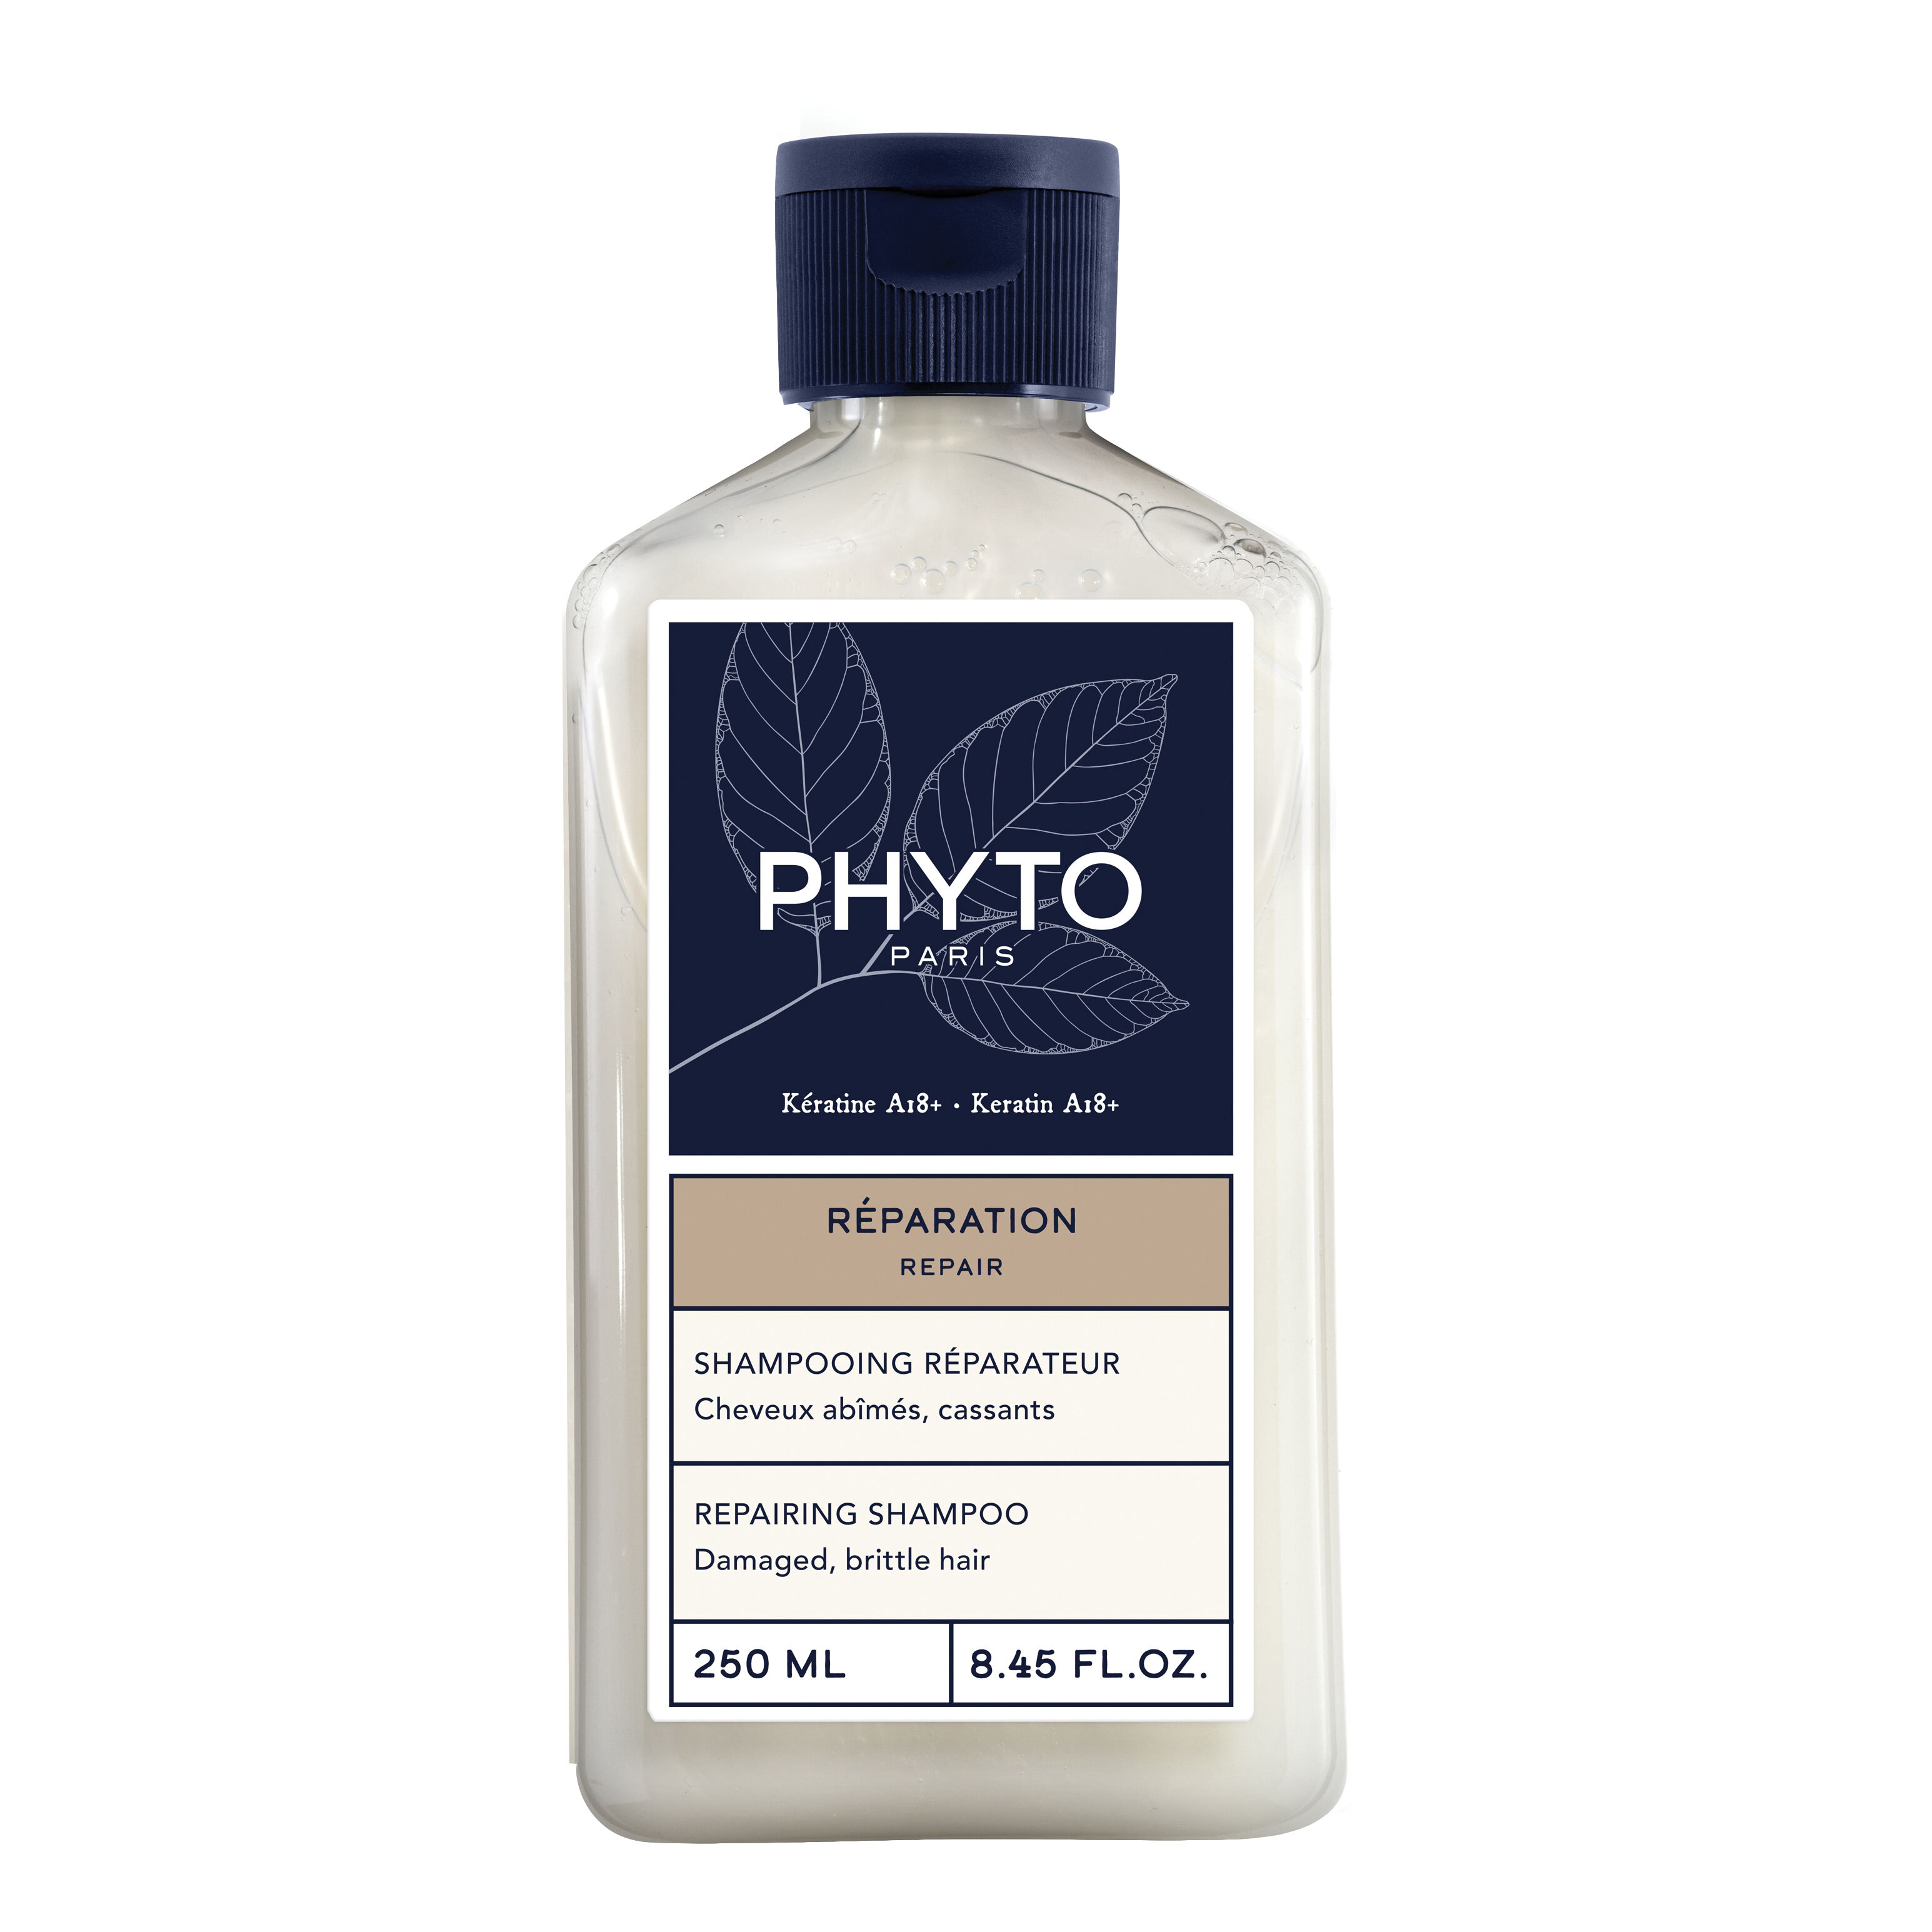 PHYTO reparation shampoo 250 ml